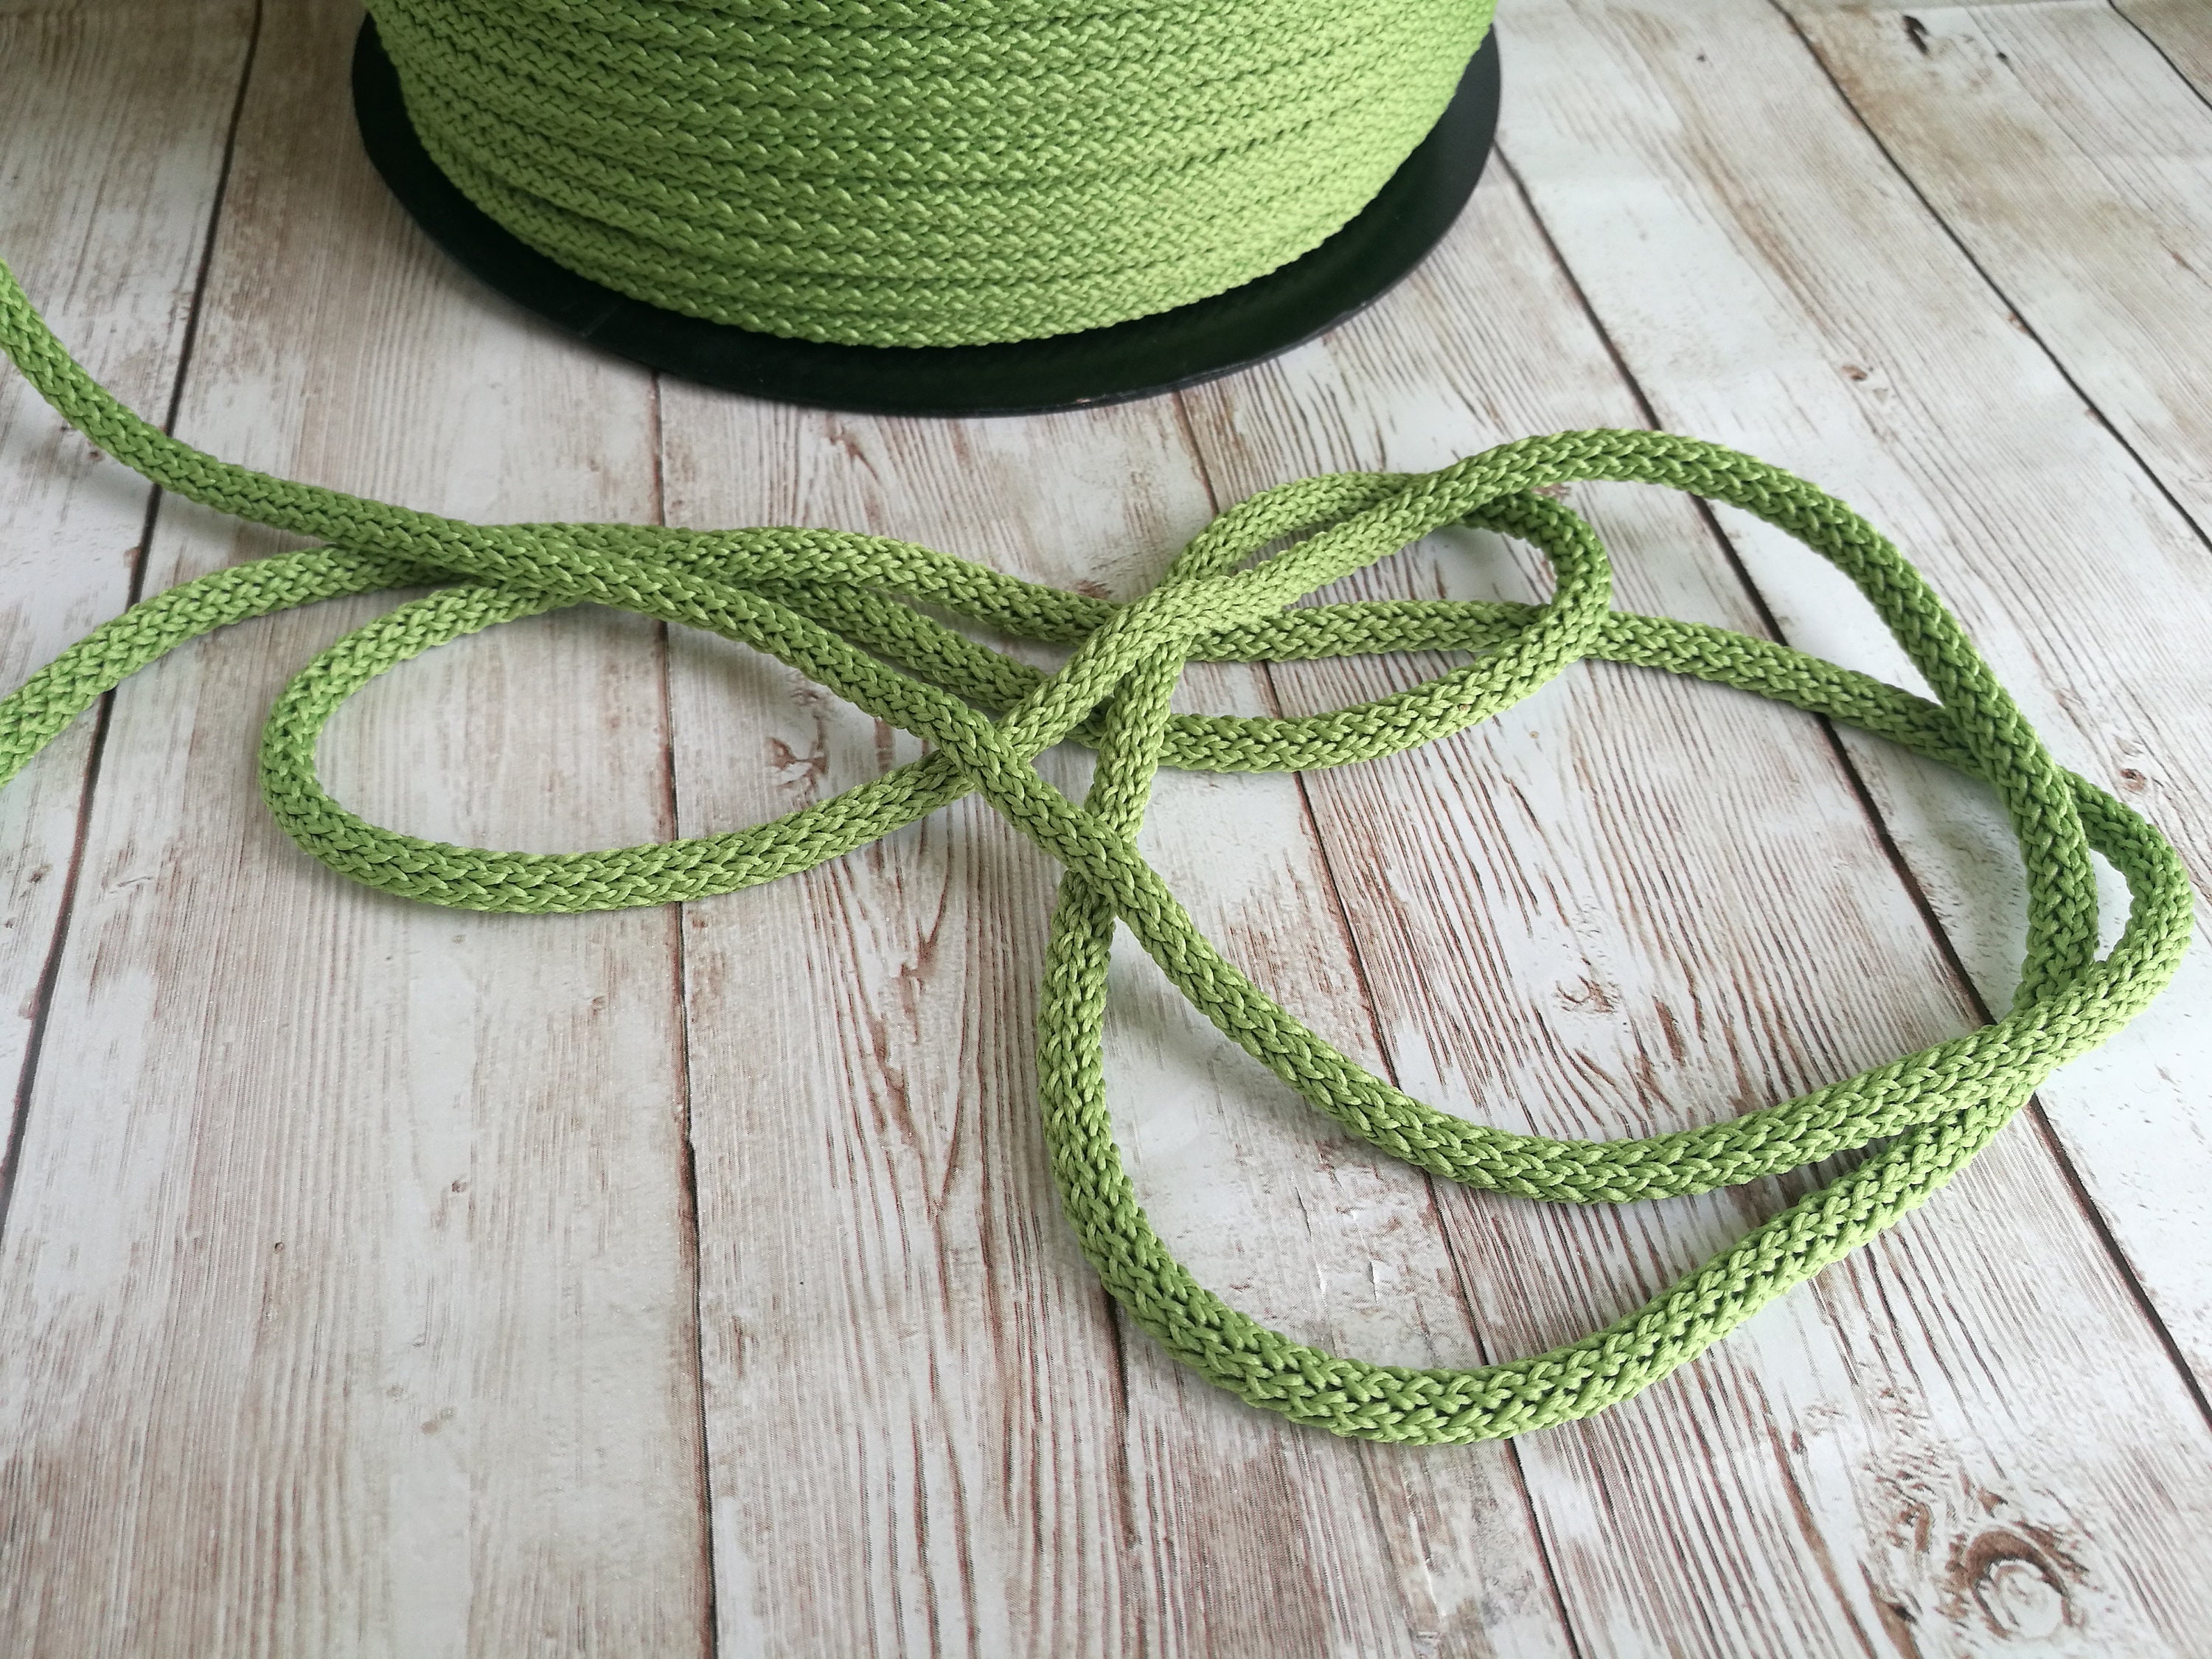 5mm Strong Rope Cord Yellow Round Crochet Tying Trimmings Chunky Yarn  Travel UK